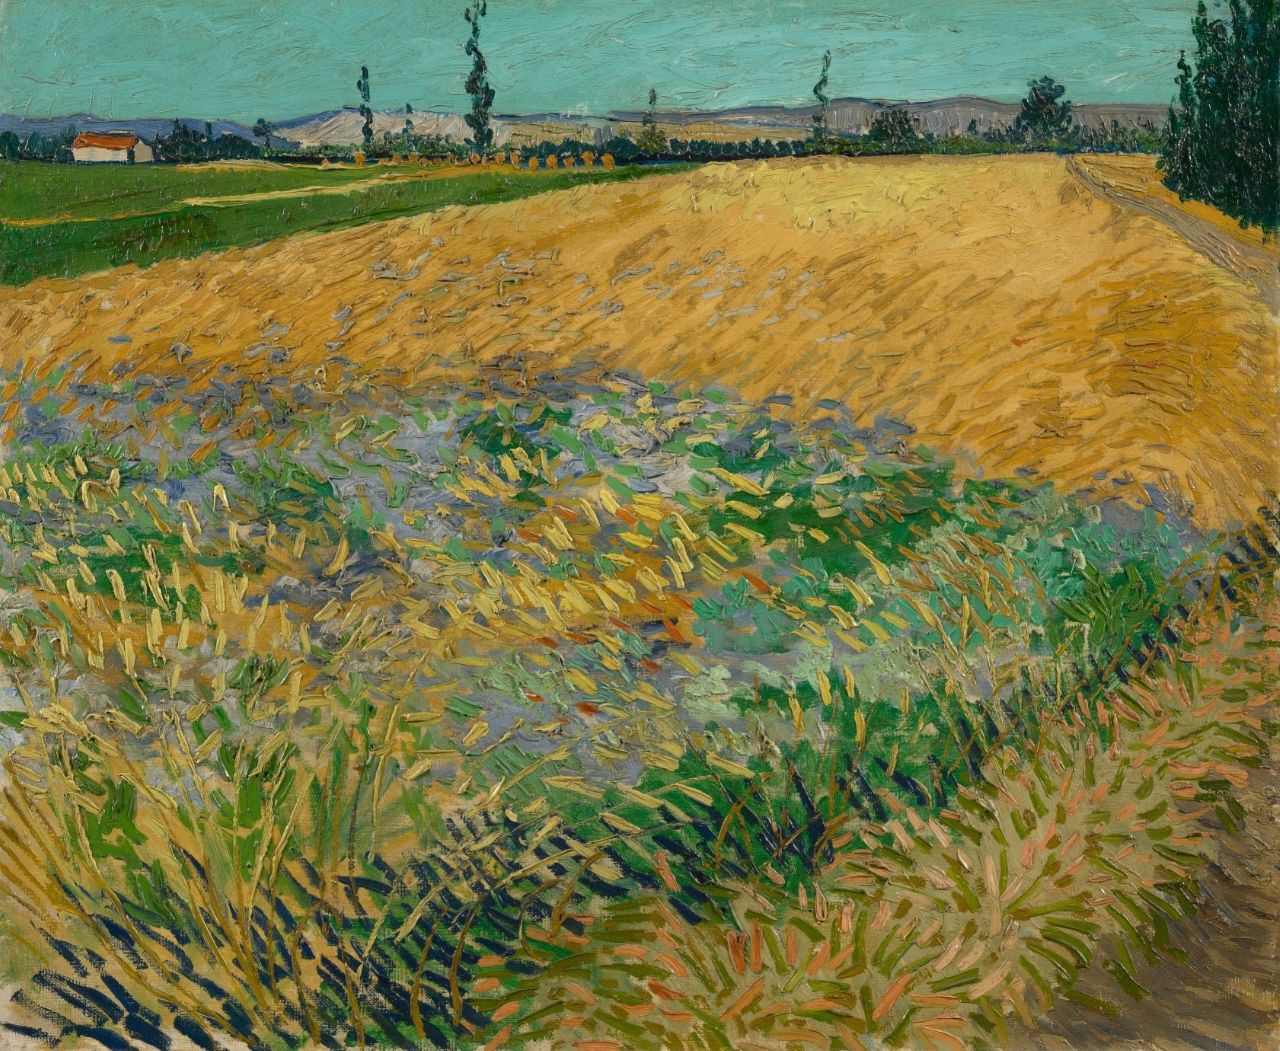 Il Van Gogh Museum lancerà una linea di profumi ispirati al grande artista